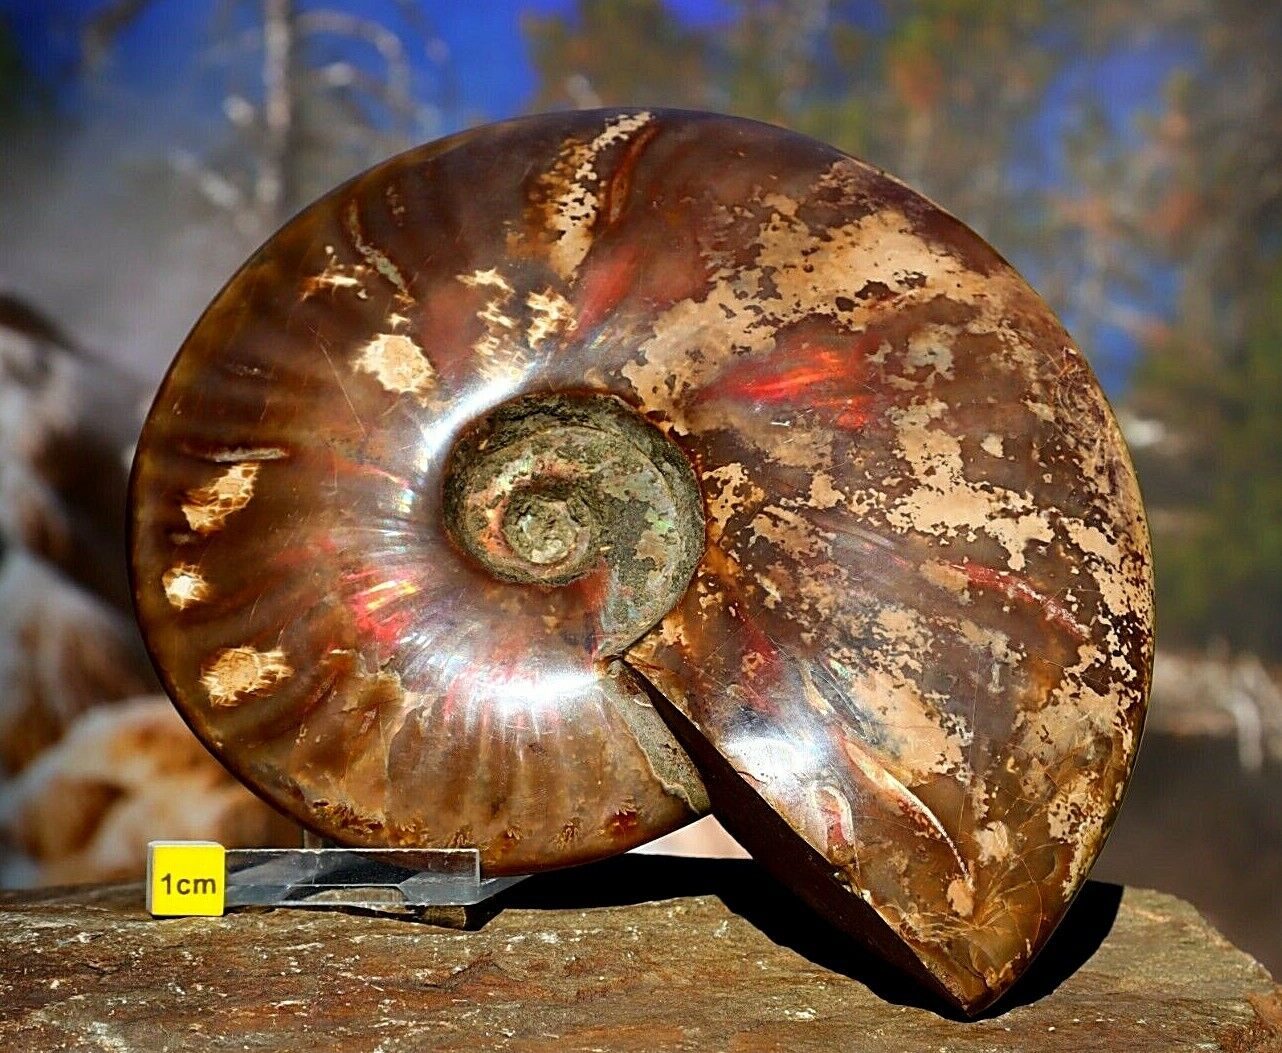 Spectacular Rare Polished Iridescent Fossil Ammonite - Fossilised Shell 994g